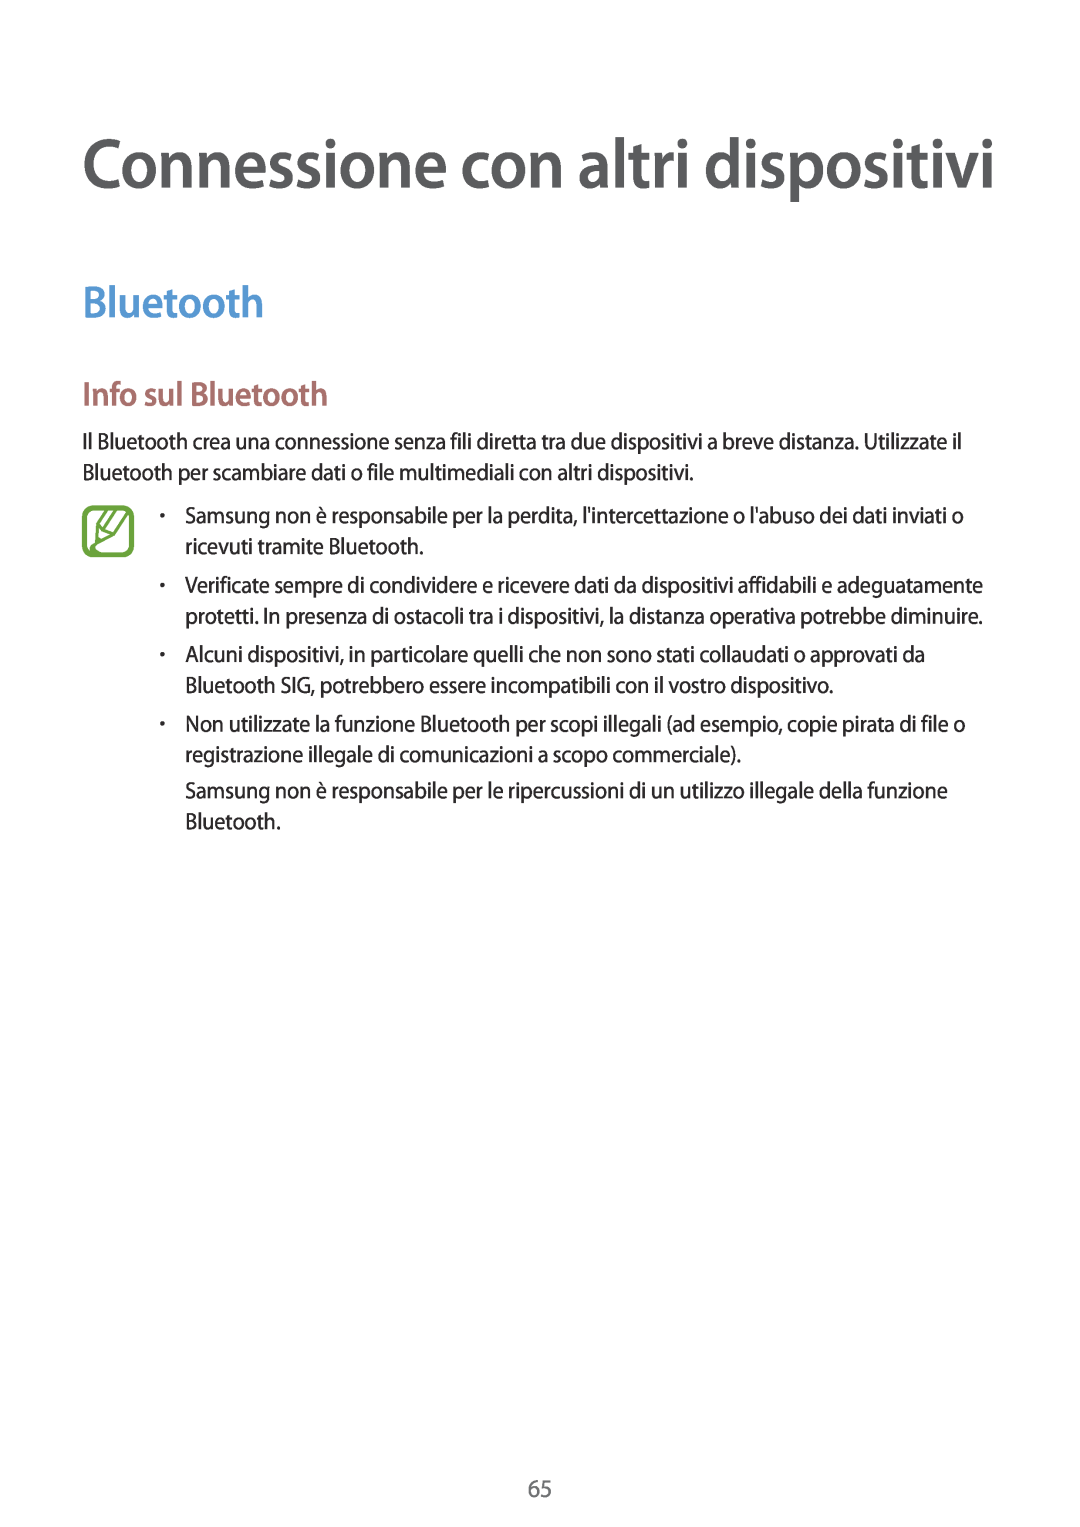 Samsung SM-G531FZAAPRT, SM-G531FZAAPLS, SM-G531FZAATUR manual Info sul Bluetooth, Connessione con altri dispositivi 